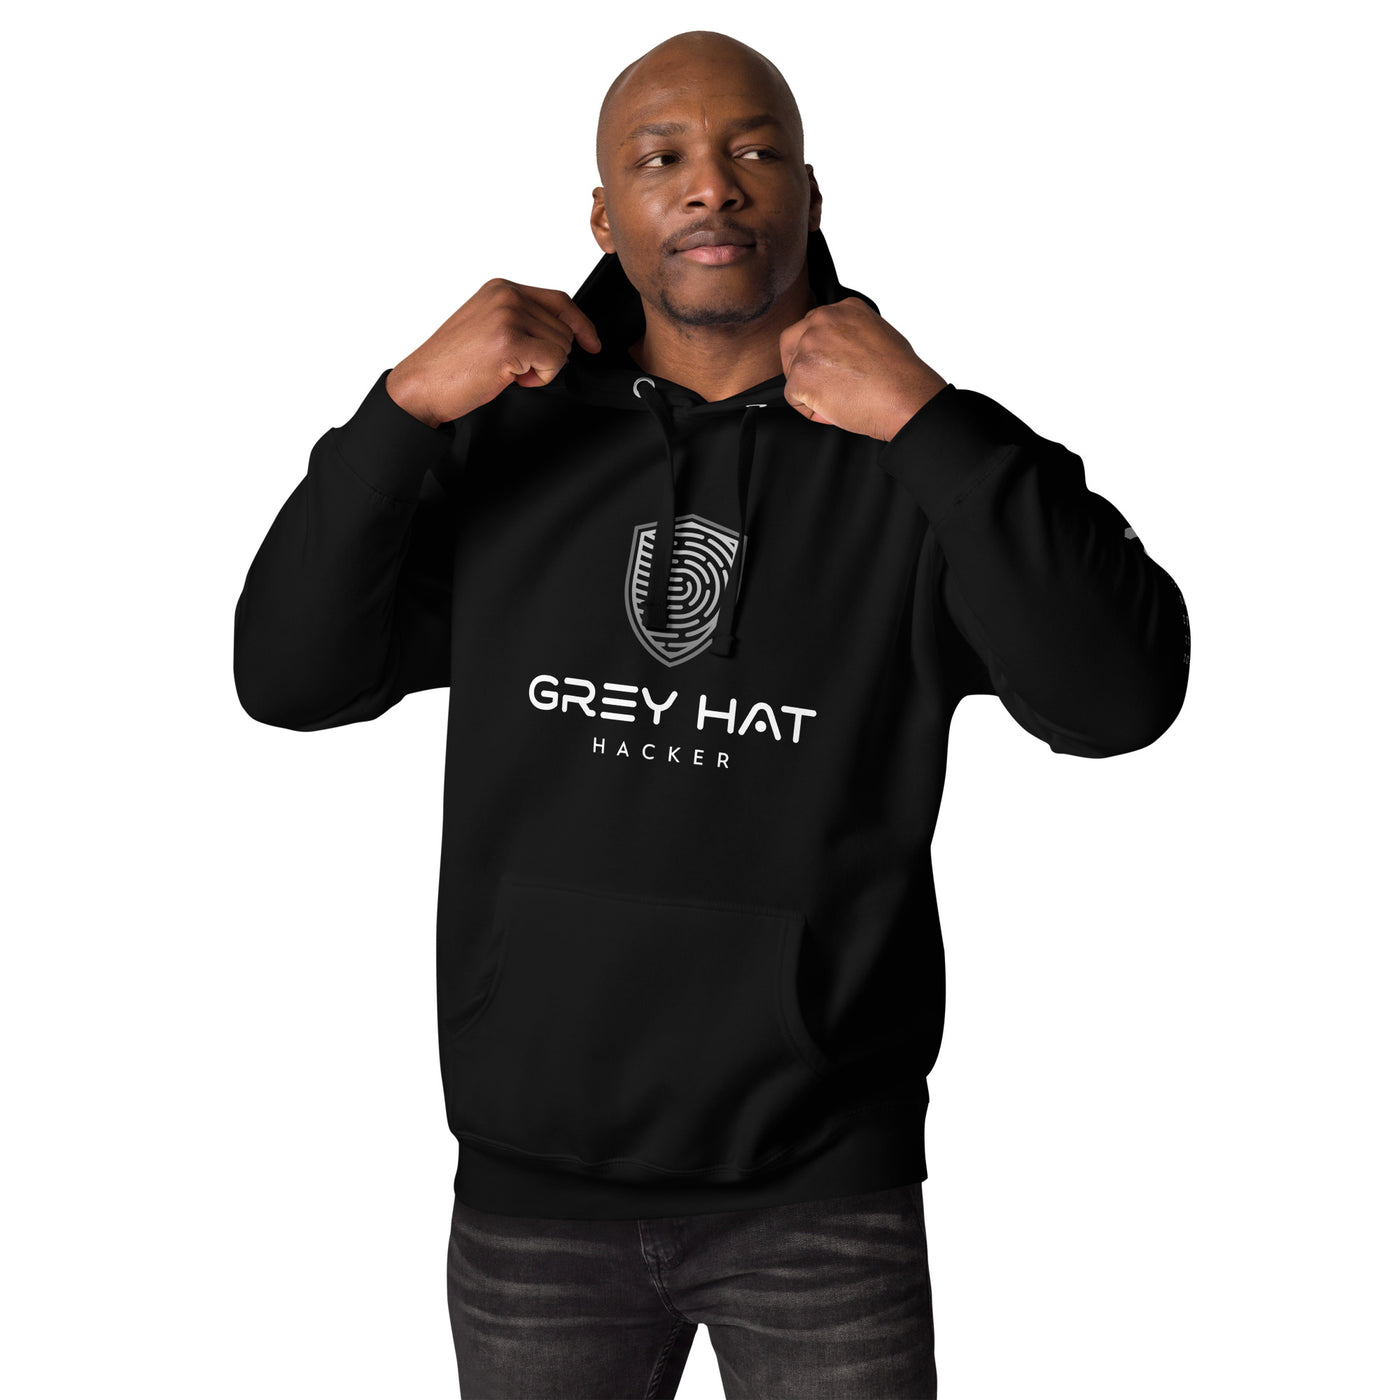 Grey Hat Hacker V5 - Unisex Hoodie